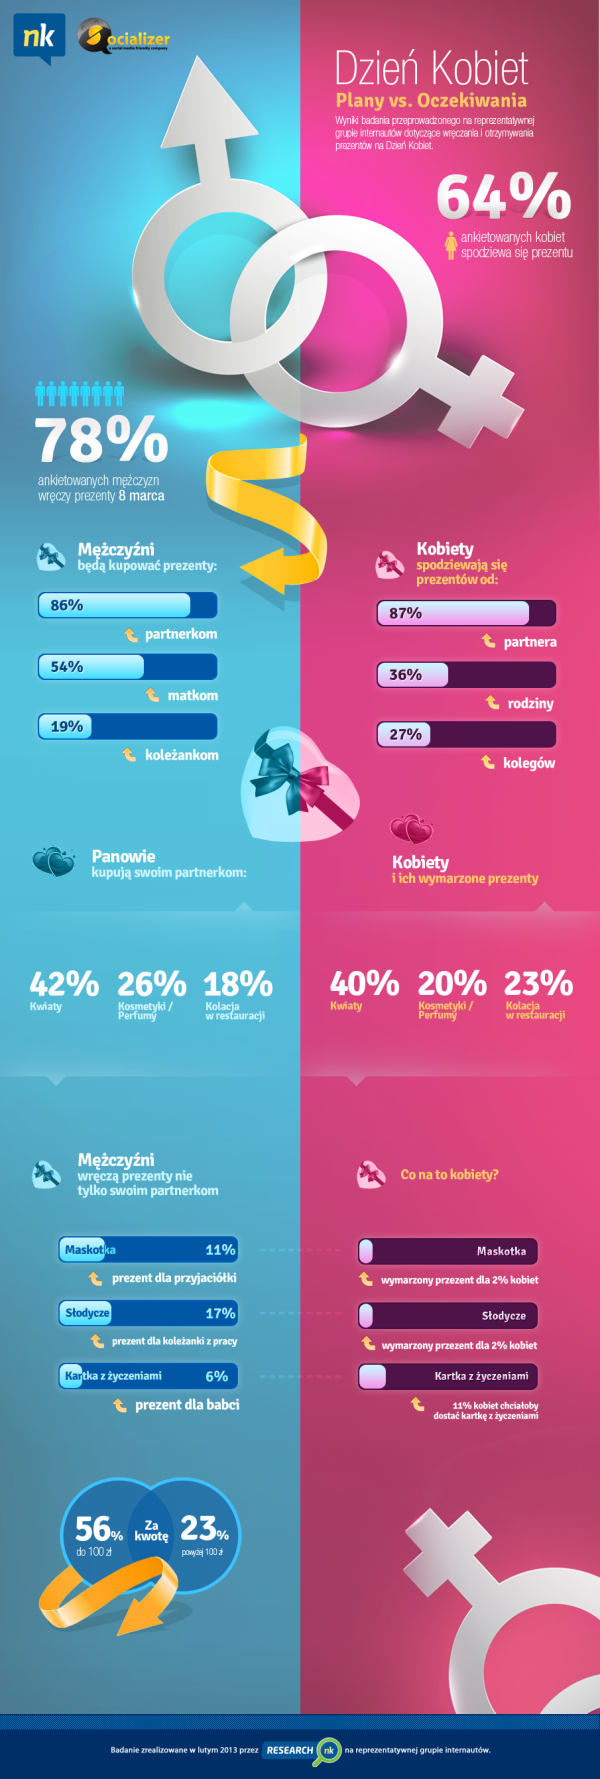 infografika-dzien-kobiet-2013